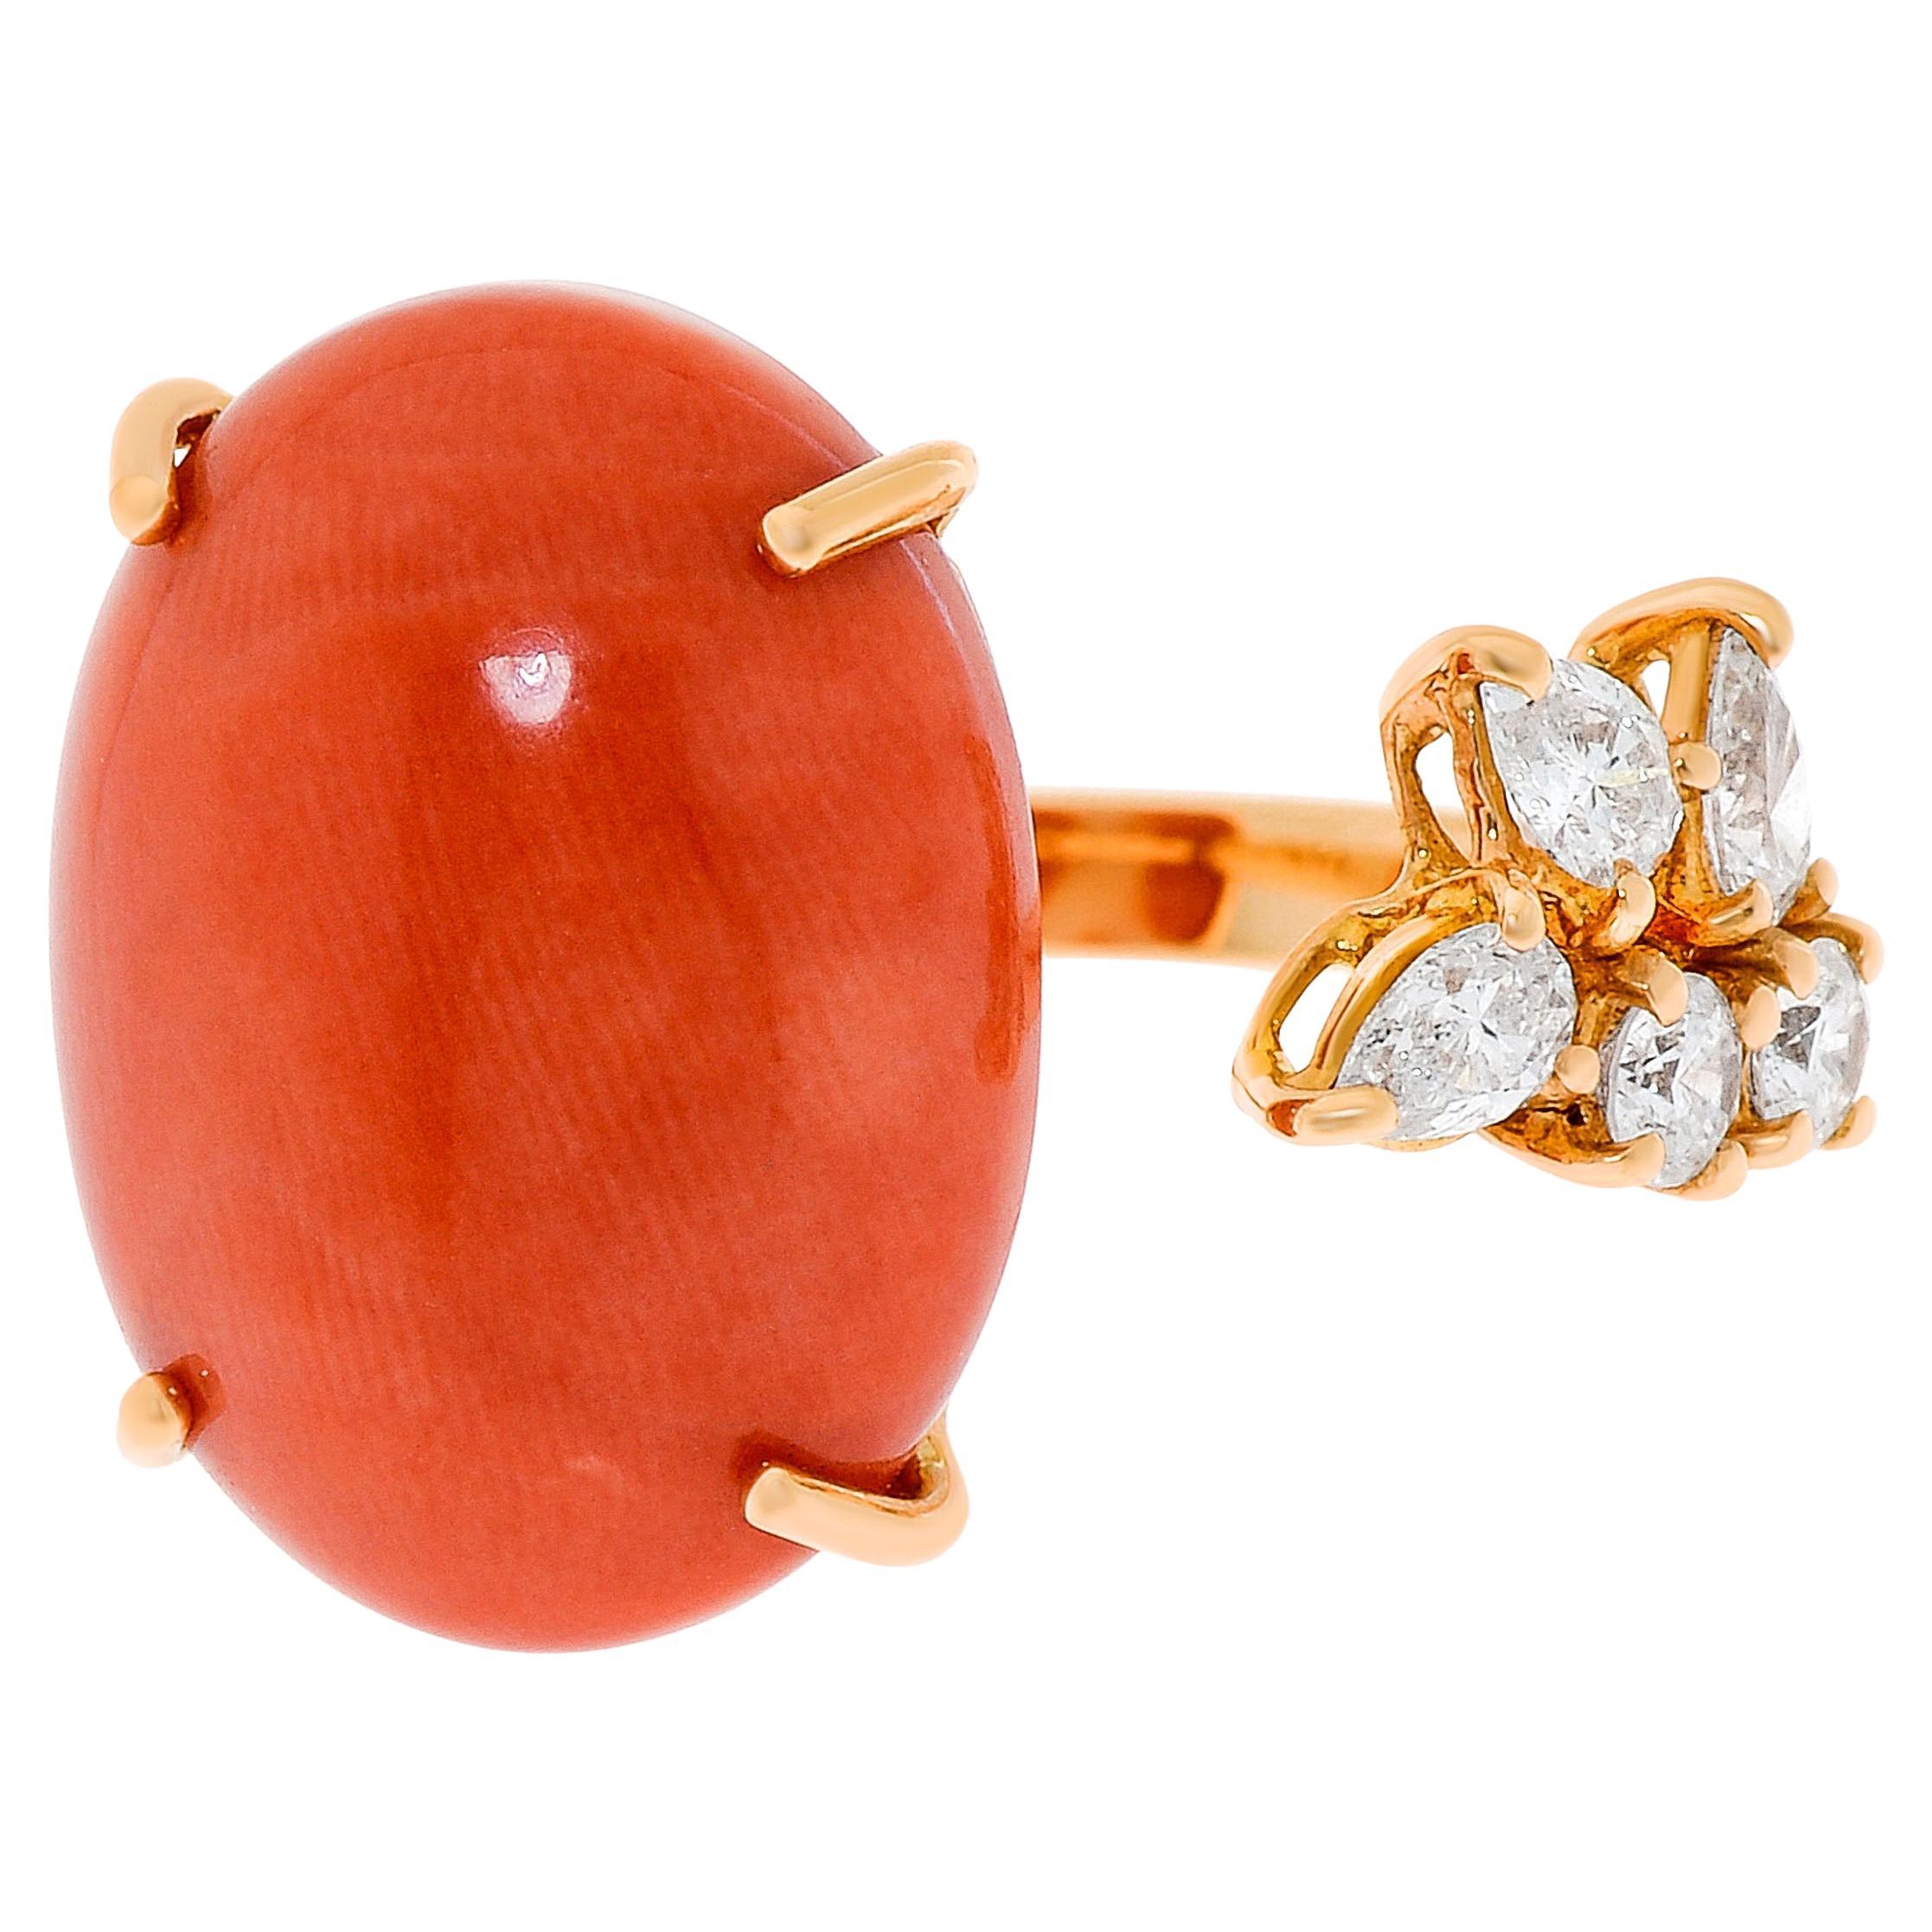 Zydo 18K Rose Gold, Coral and White Diamond Gemstone Ring sz. 6.5